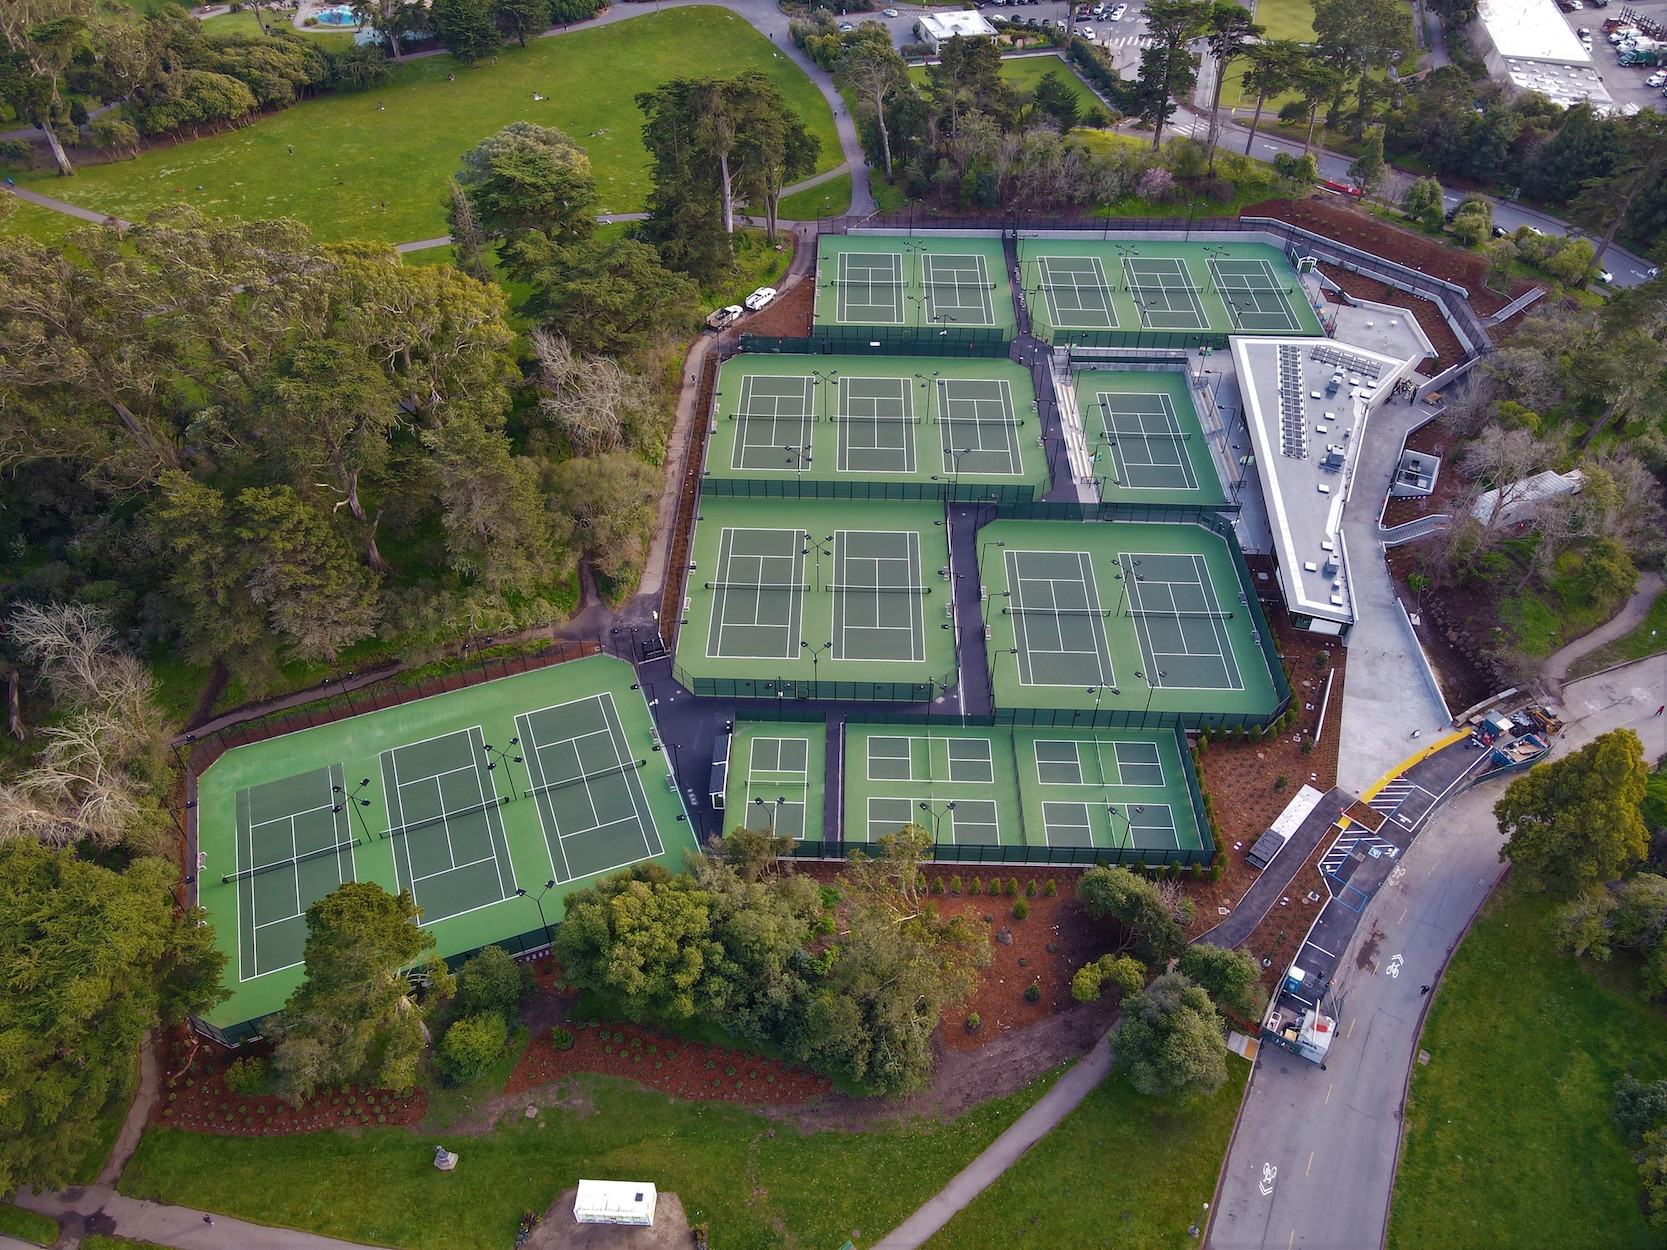 Tennis Center at Golden Gate Park Earns Coveted National Award